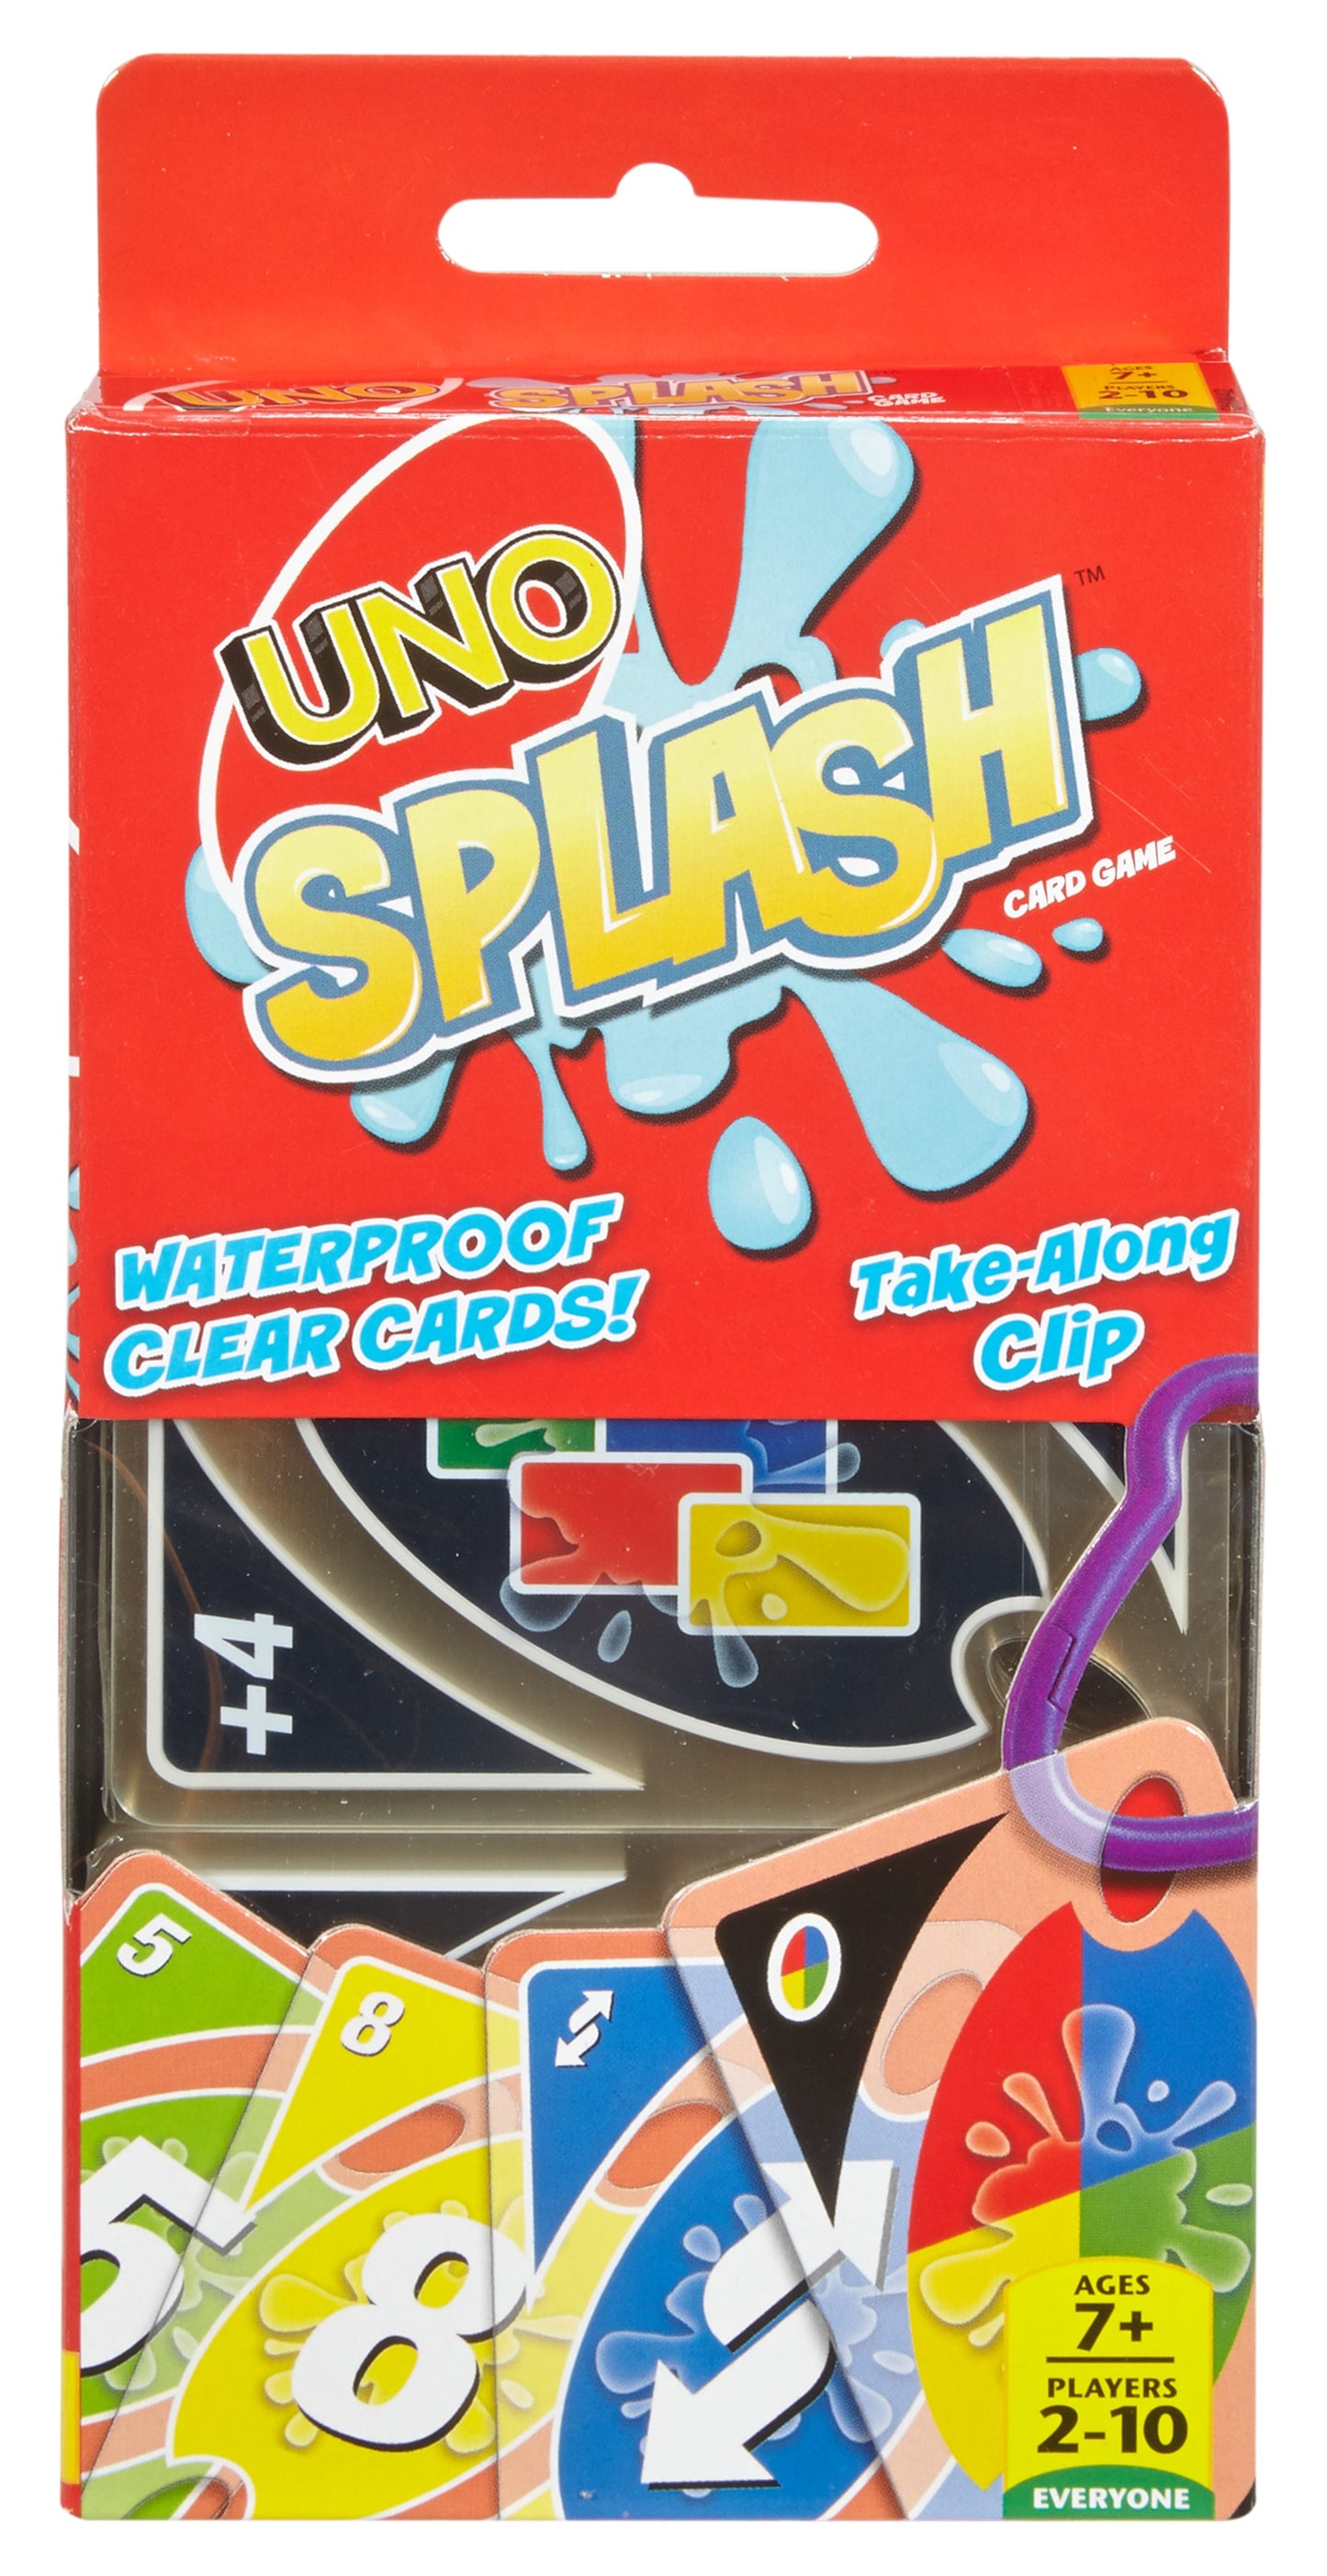 Uno splash